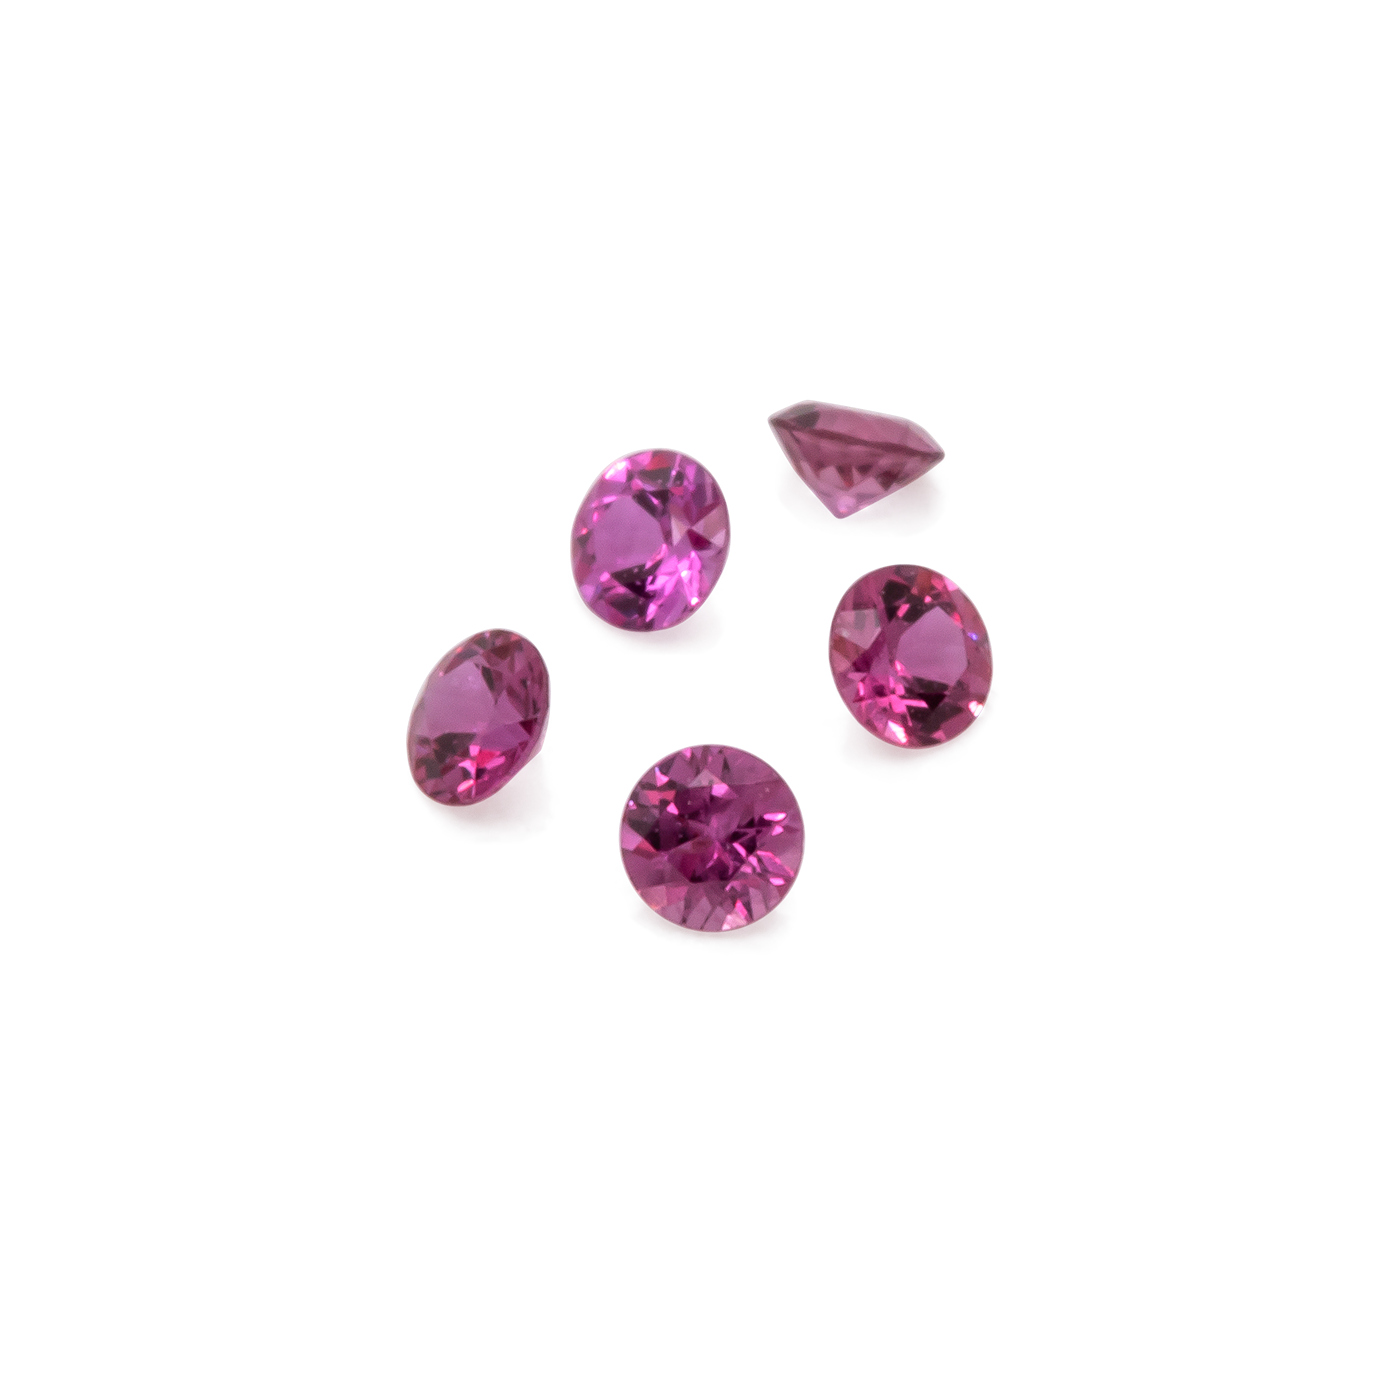 Saphir - pink, rund, 1,5x1,5 mm, ca. 0,016 cts, Nr. XSR11158